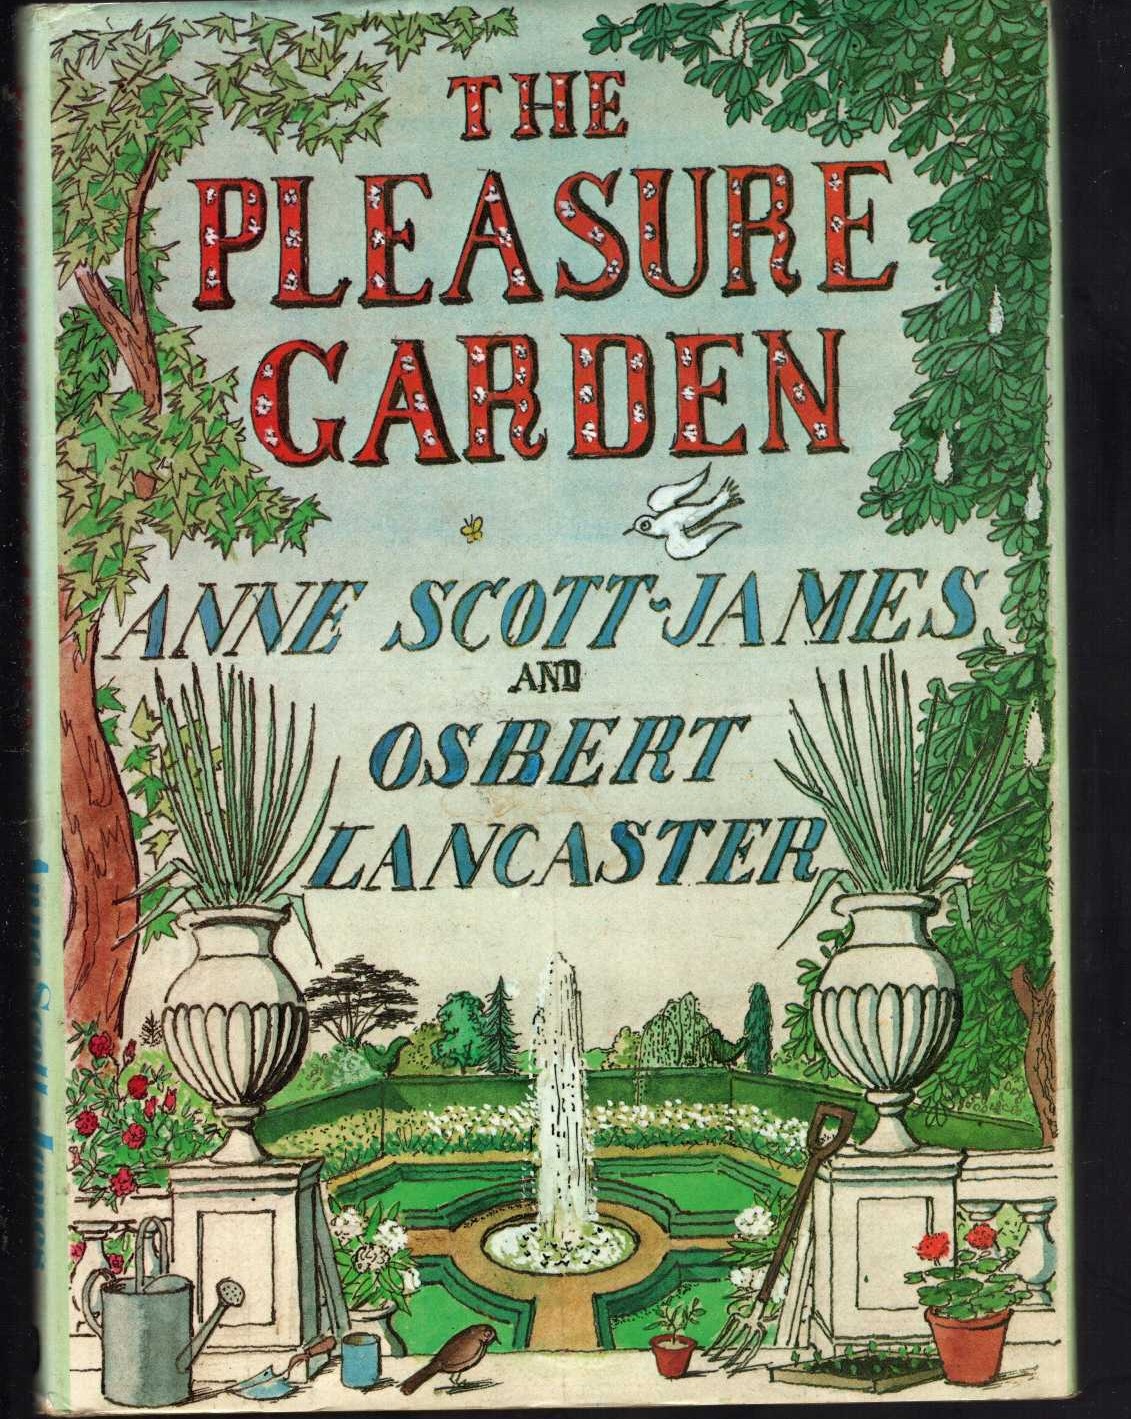 THE PLEASURE GARDEN front book cover image